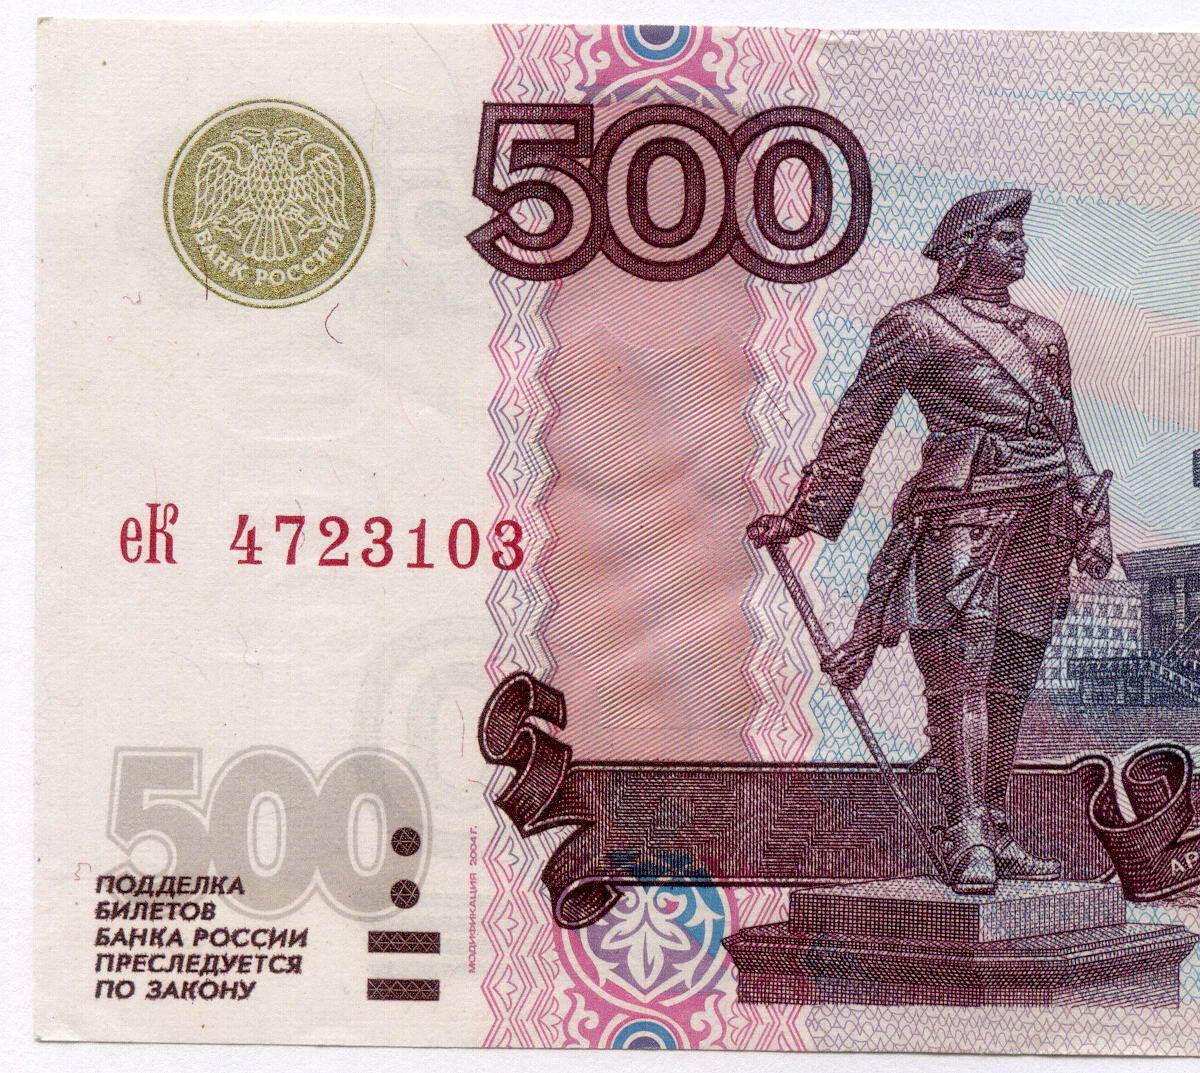 Верни 500 рублей. 500 Рублей. Купюра 500 рублей. Банкнота 500 рублей. Деньги 500 рублей.